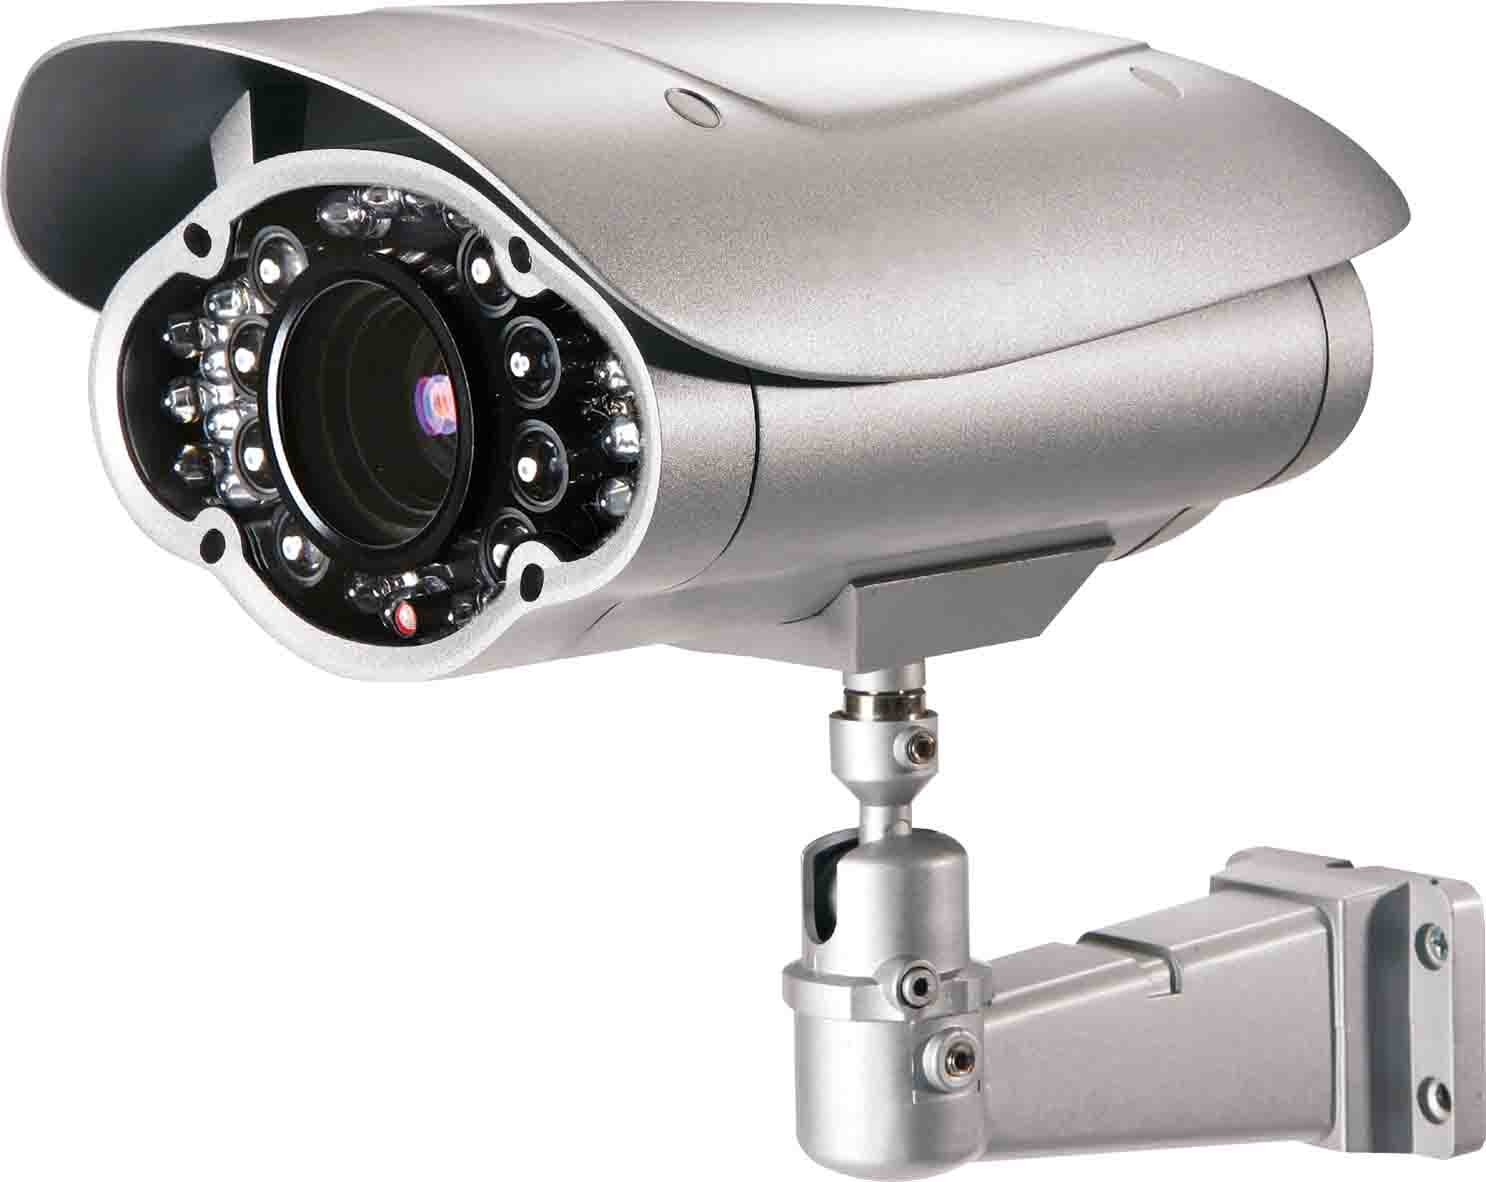 Kamera Keamanan CCTV Jogja Melindungi Semua Hal Yang Kita Cintai